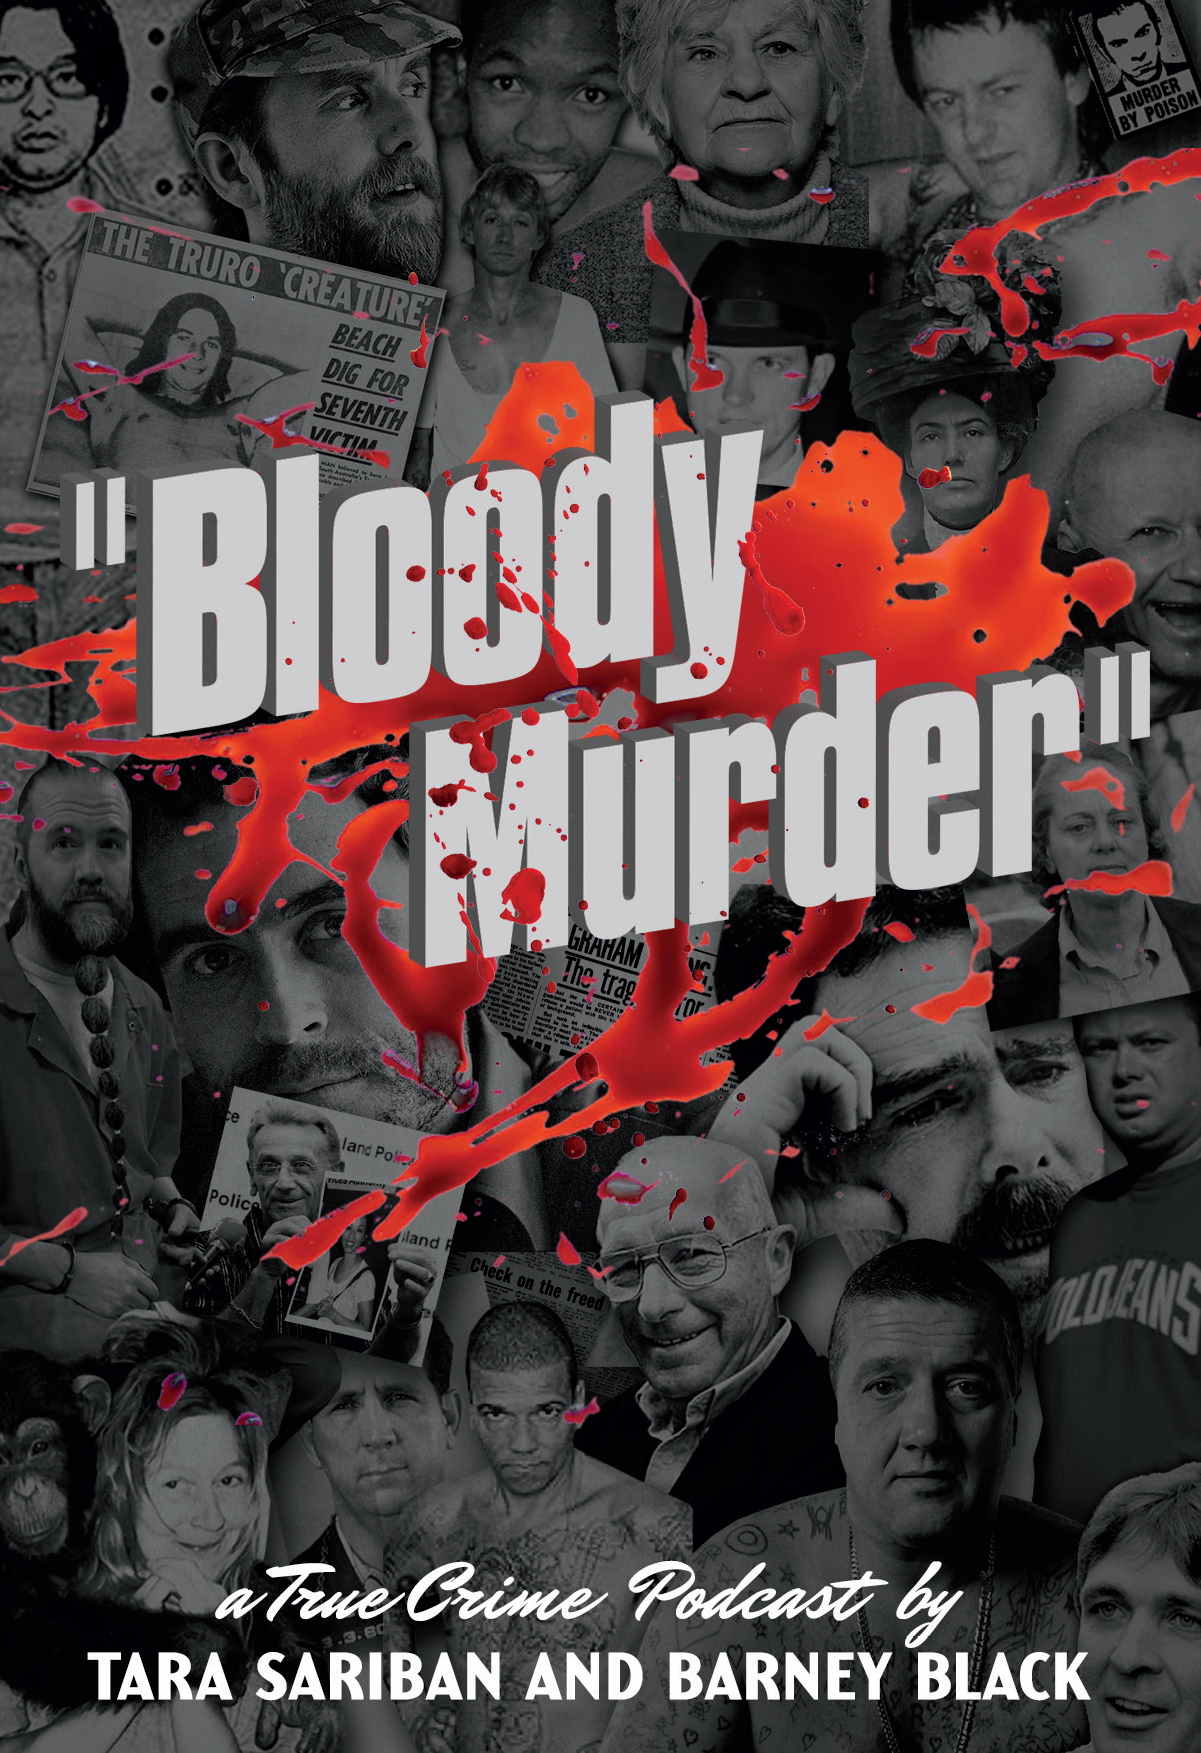 Bloody Murder - A True Crime Podcast